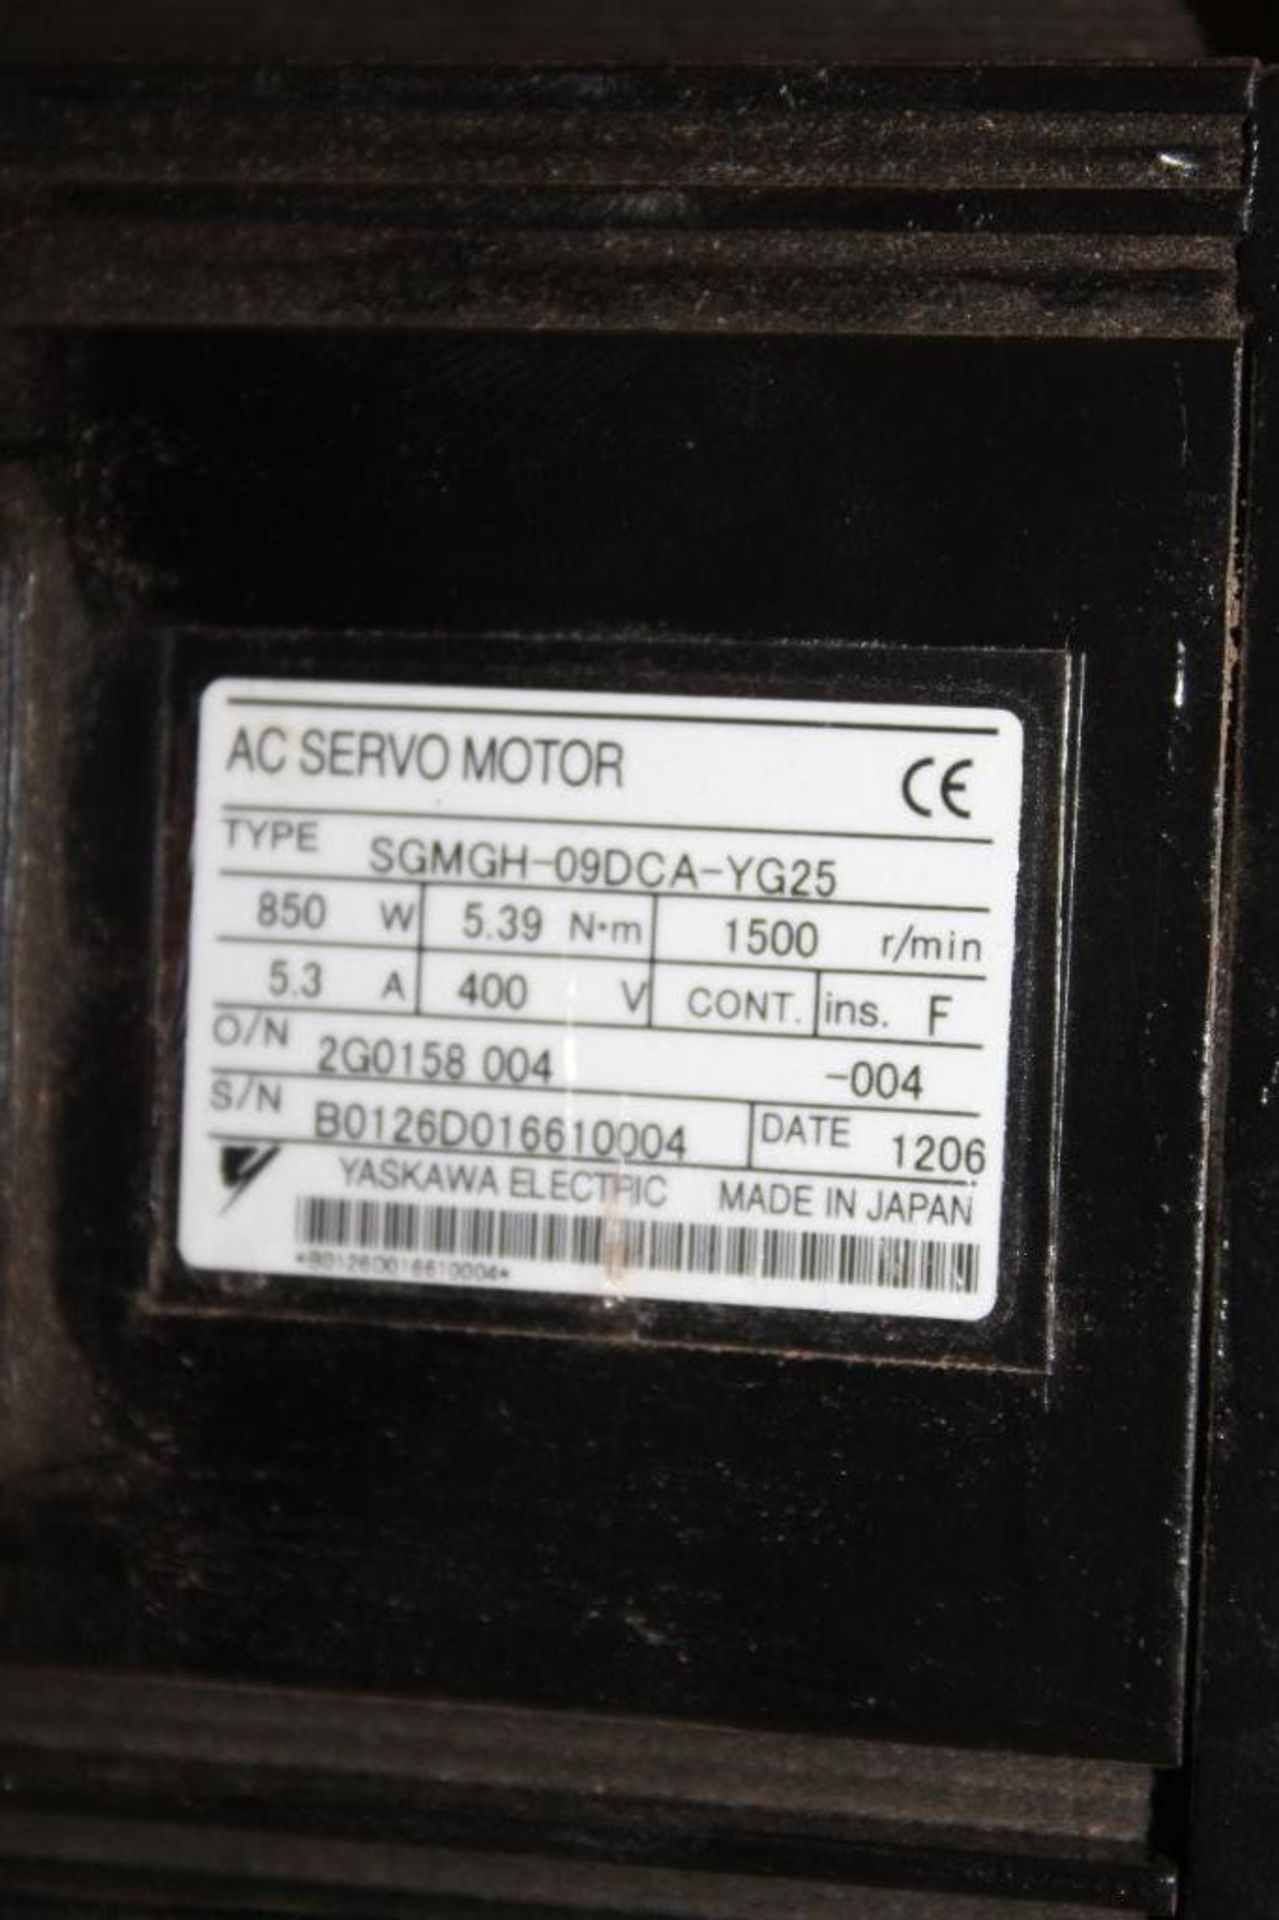 Yaskawa, 2G0158004, Electric AC Servo Motor - Image 2 of 2